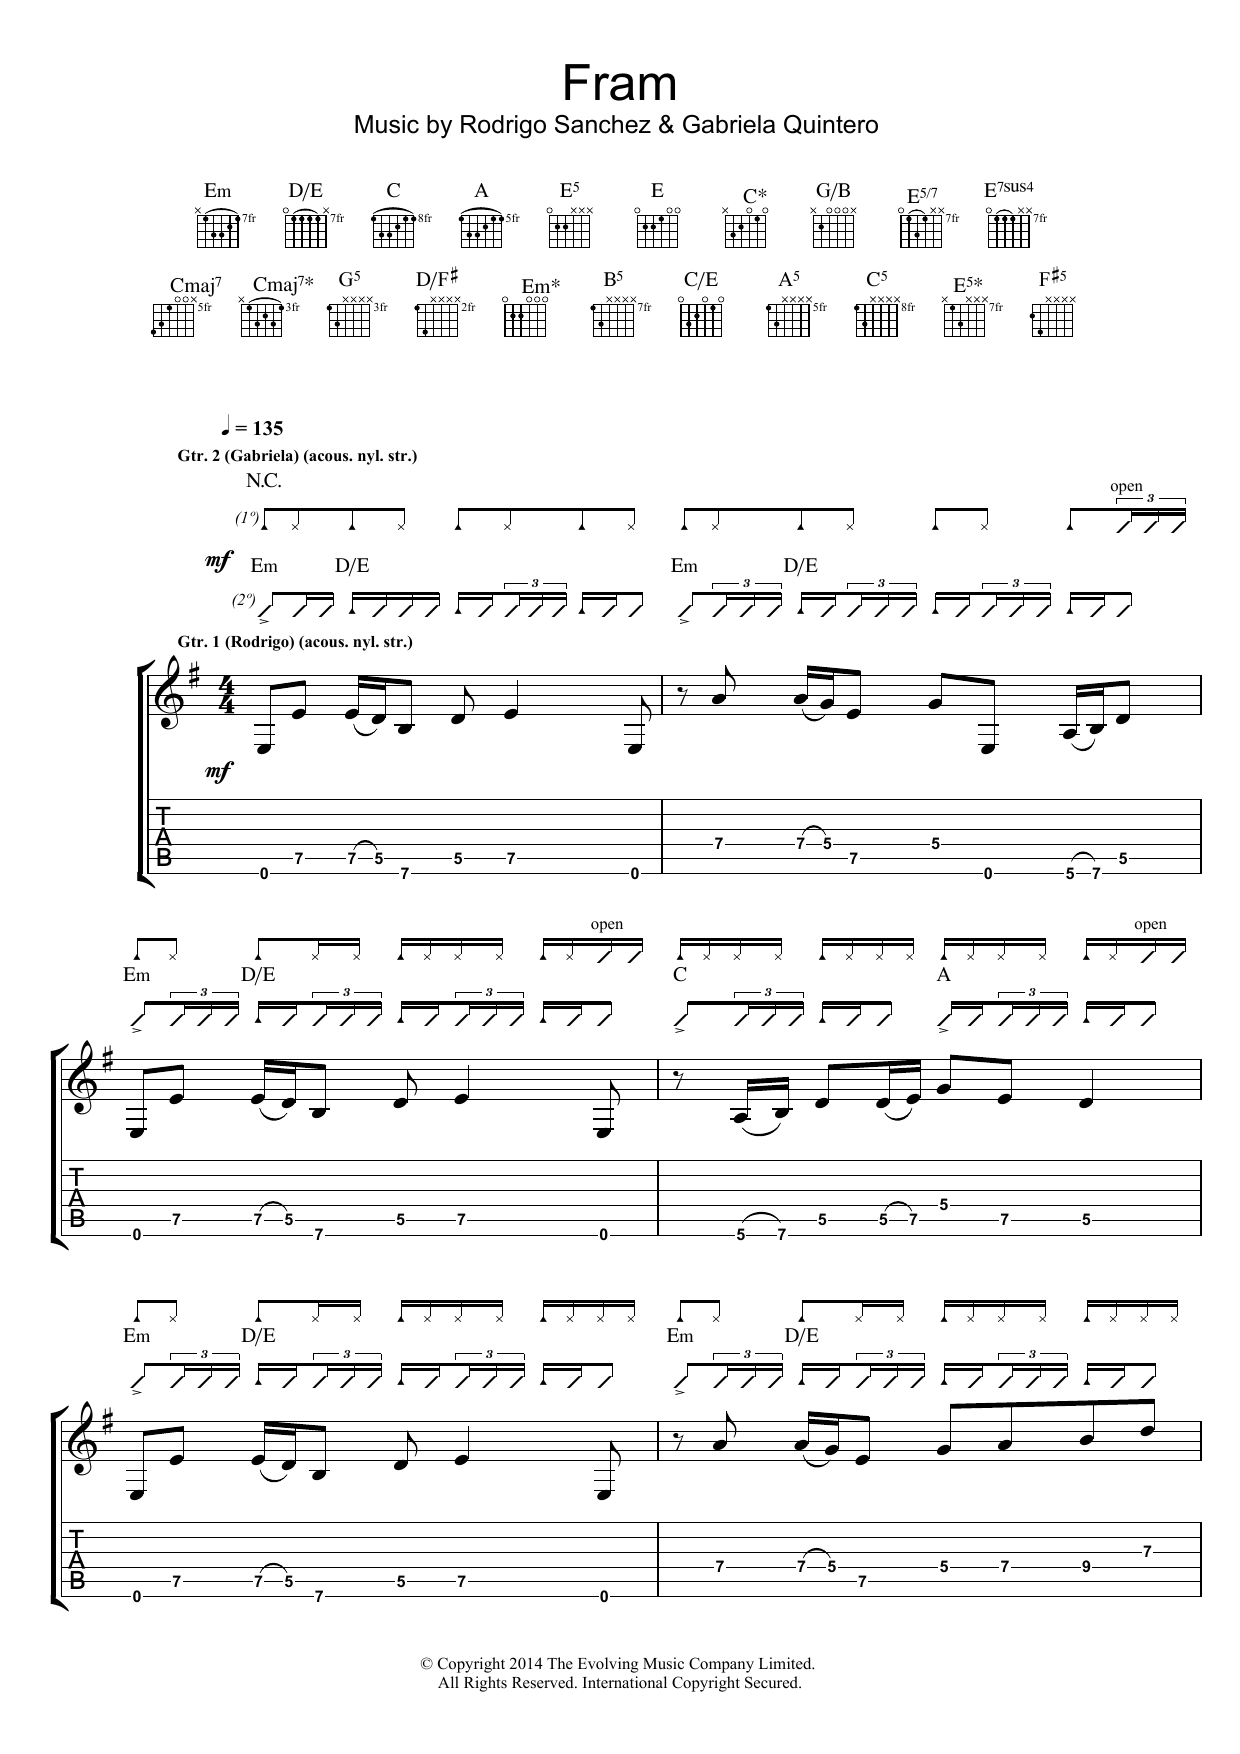 Rodrigo y Gabriela FRAM Sheet Music Notes & Chords for Guitar Tab - Download or Print PDF